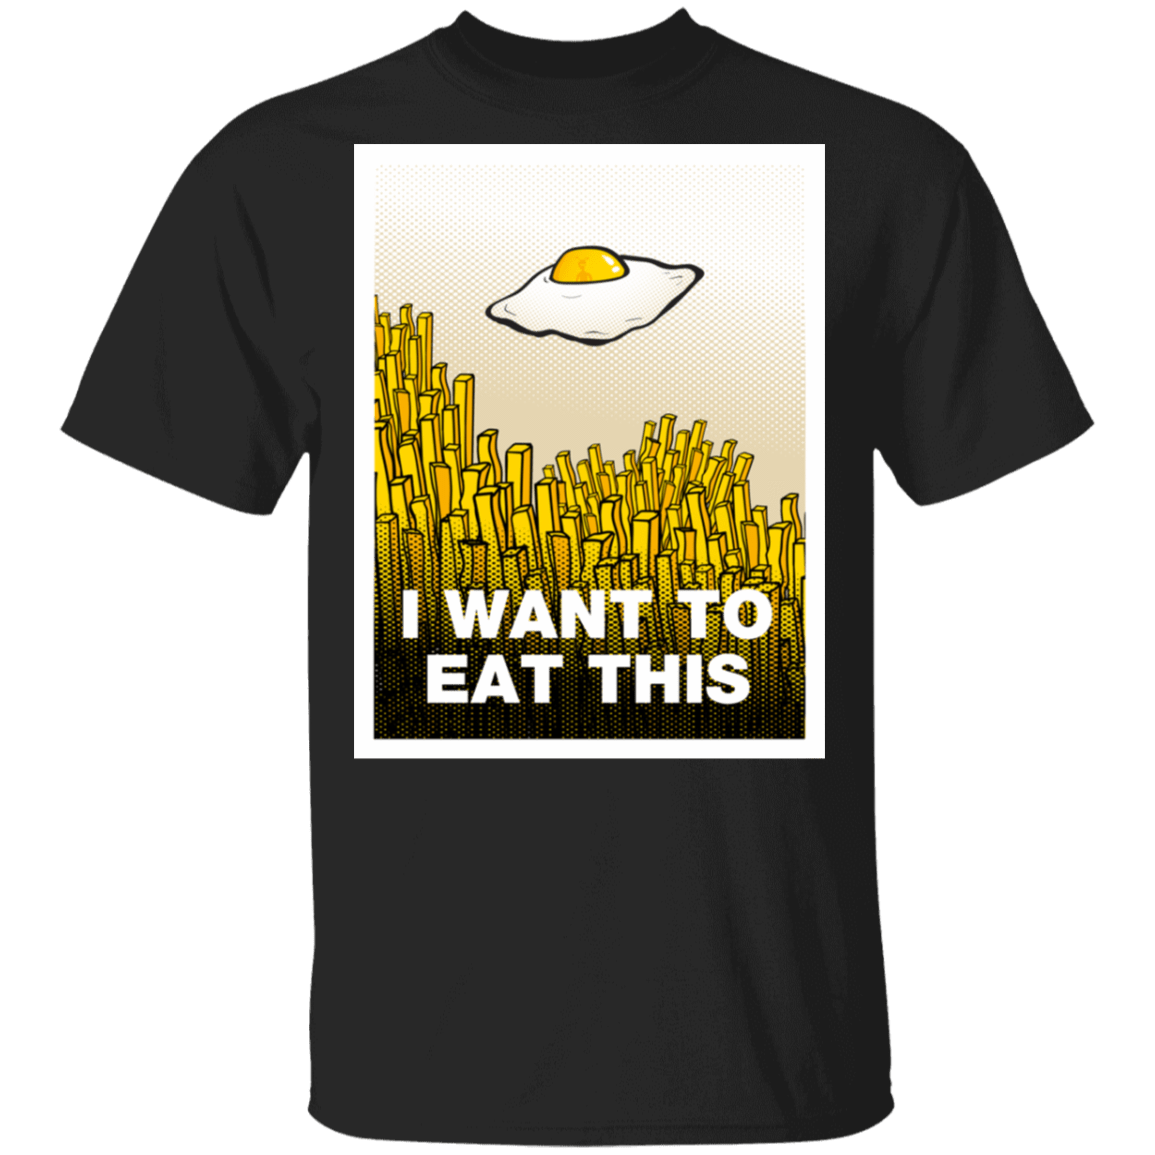 T-Shirts Black / S Egg Files T-Shirt